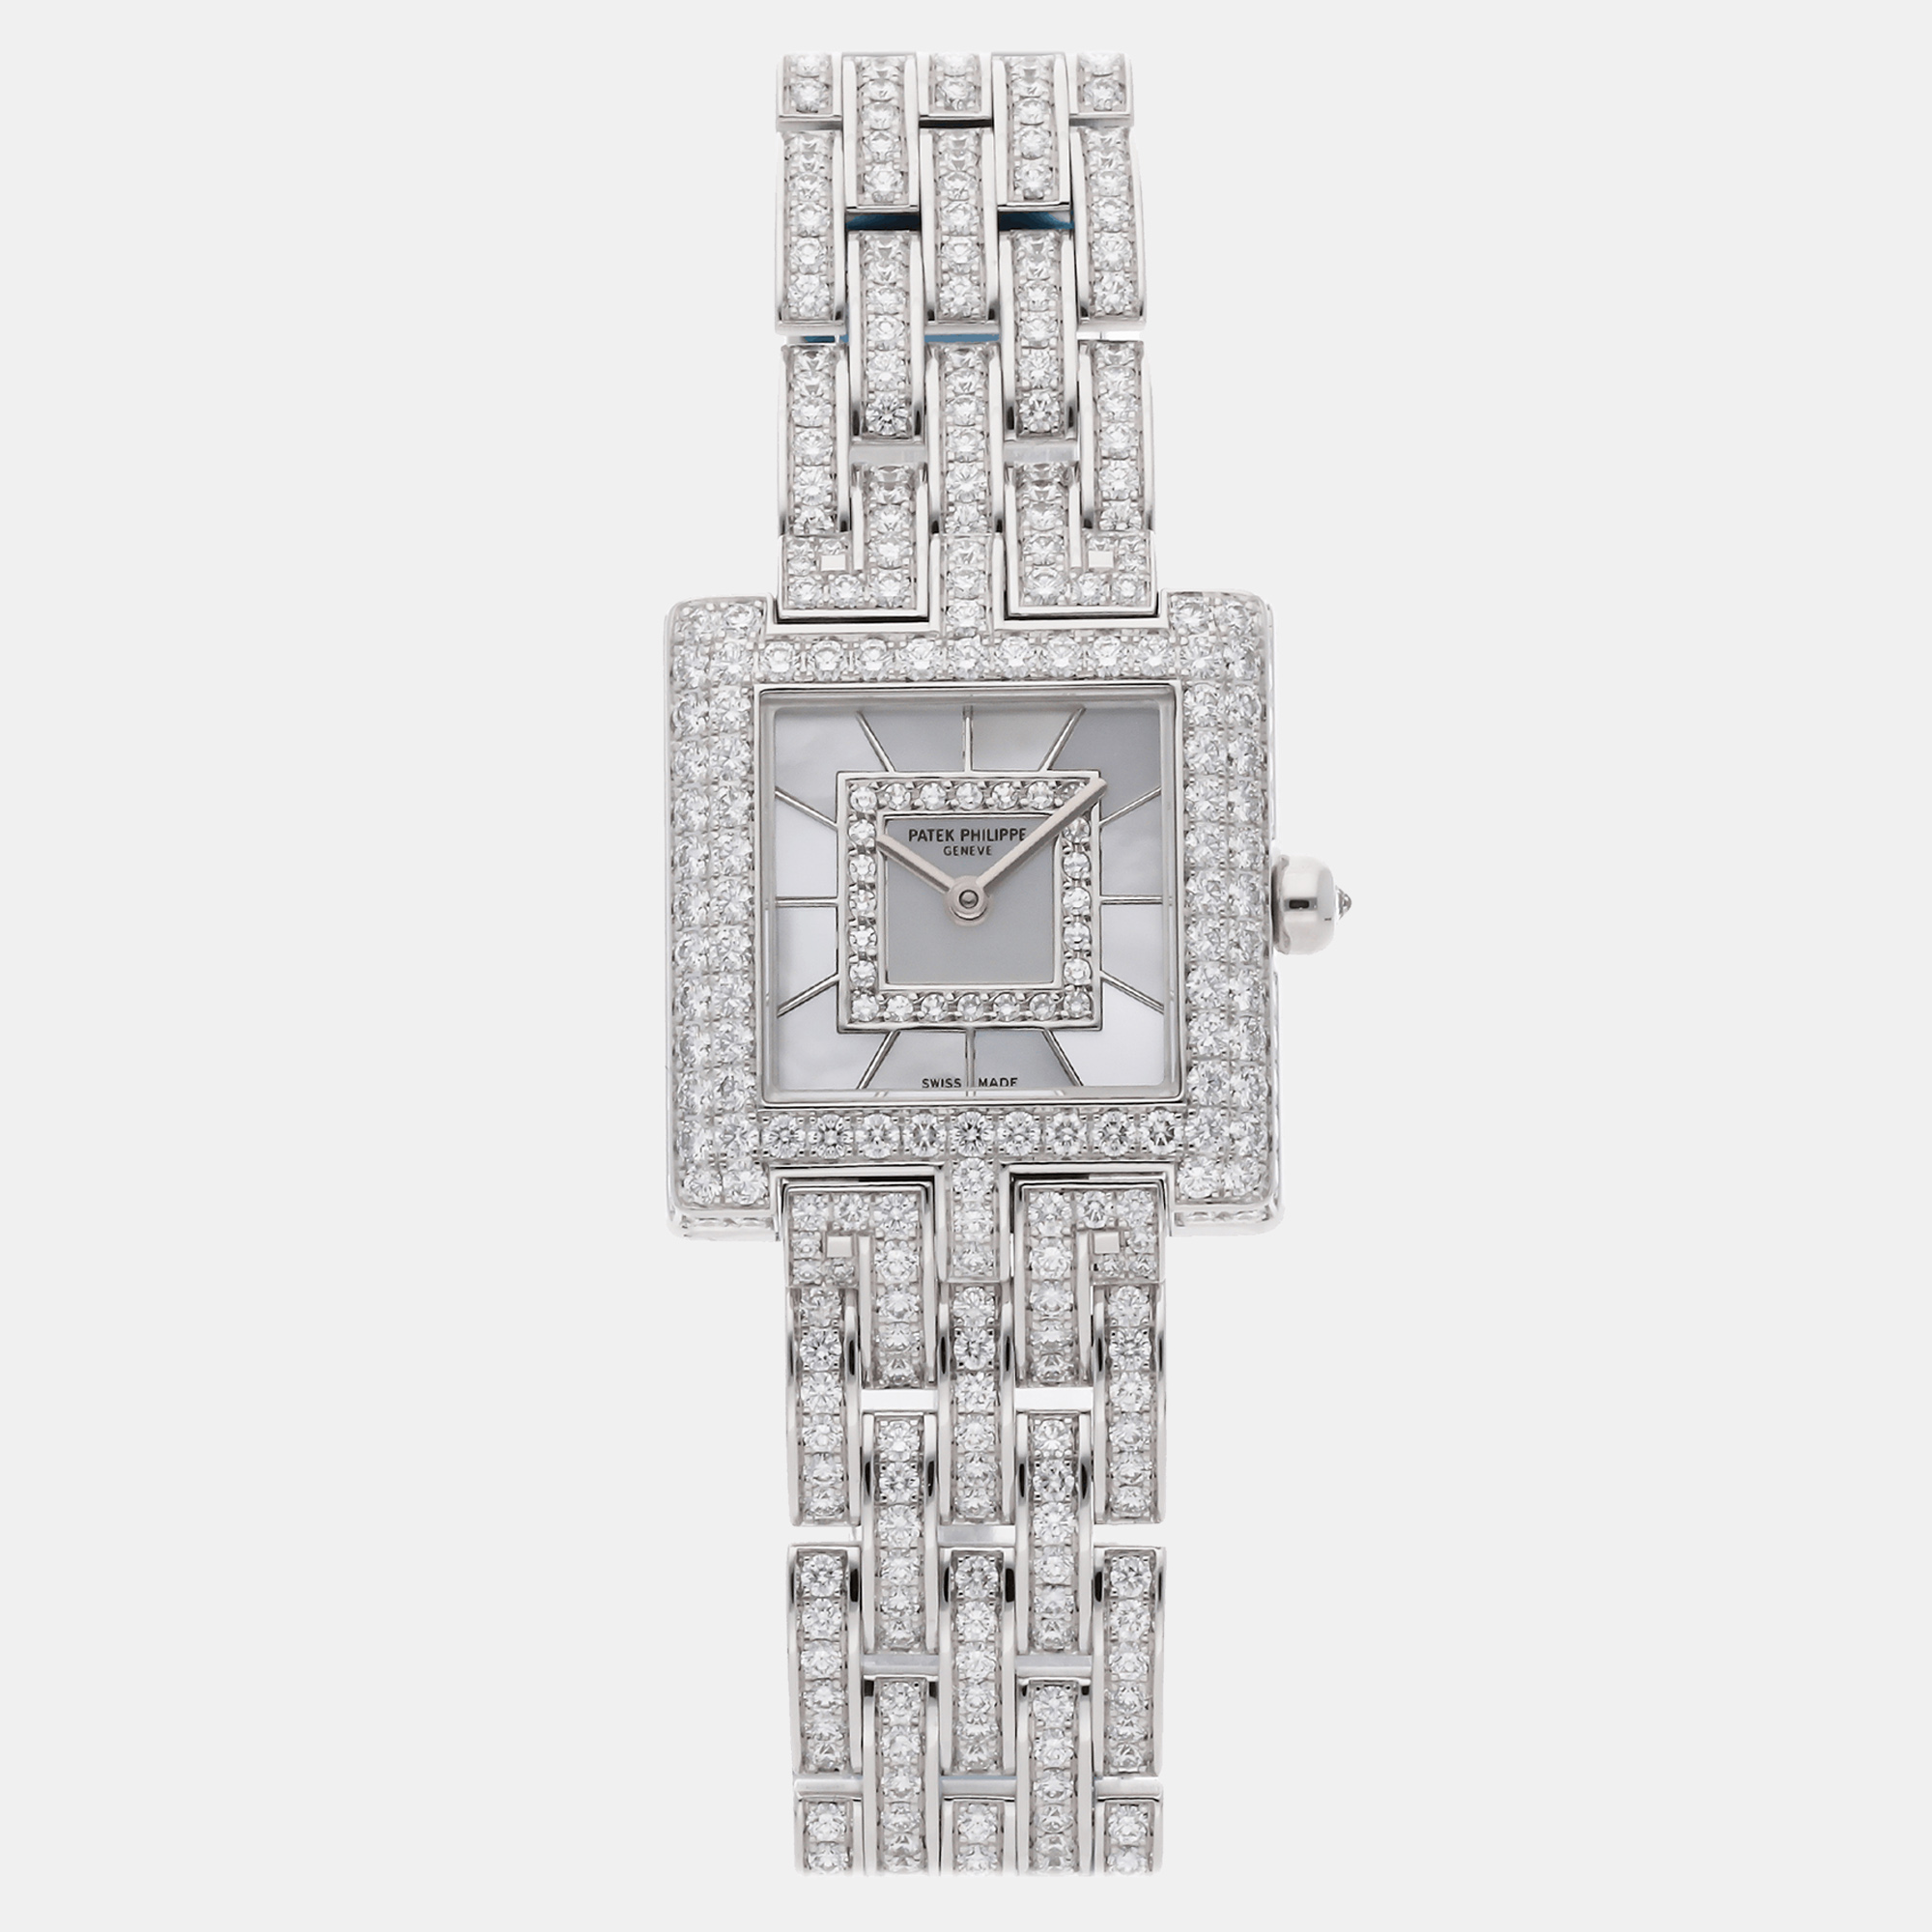 Patek philippe silver 18k white gold gondolo 4874/1g-001 quartz women's wristwatch 22 mm